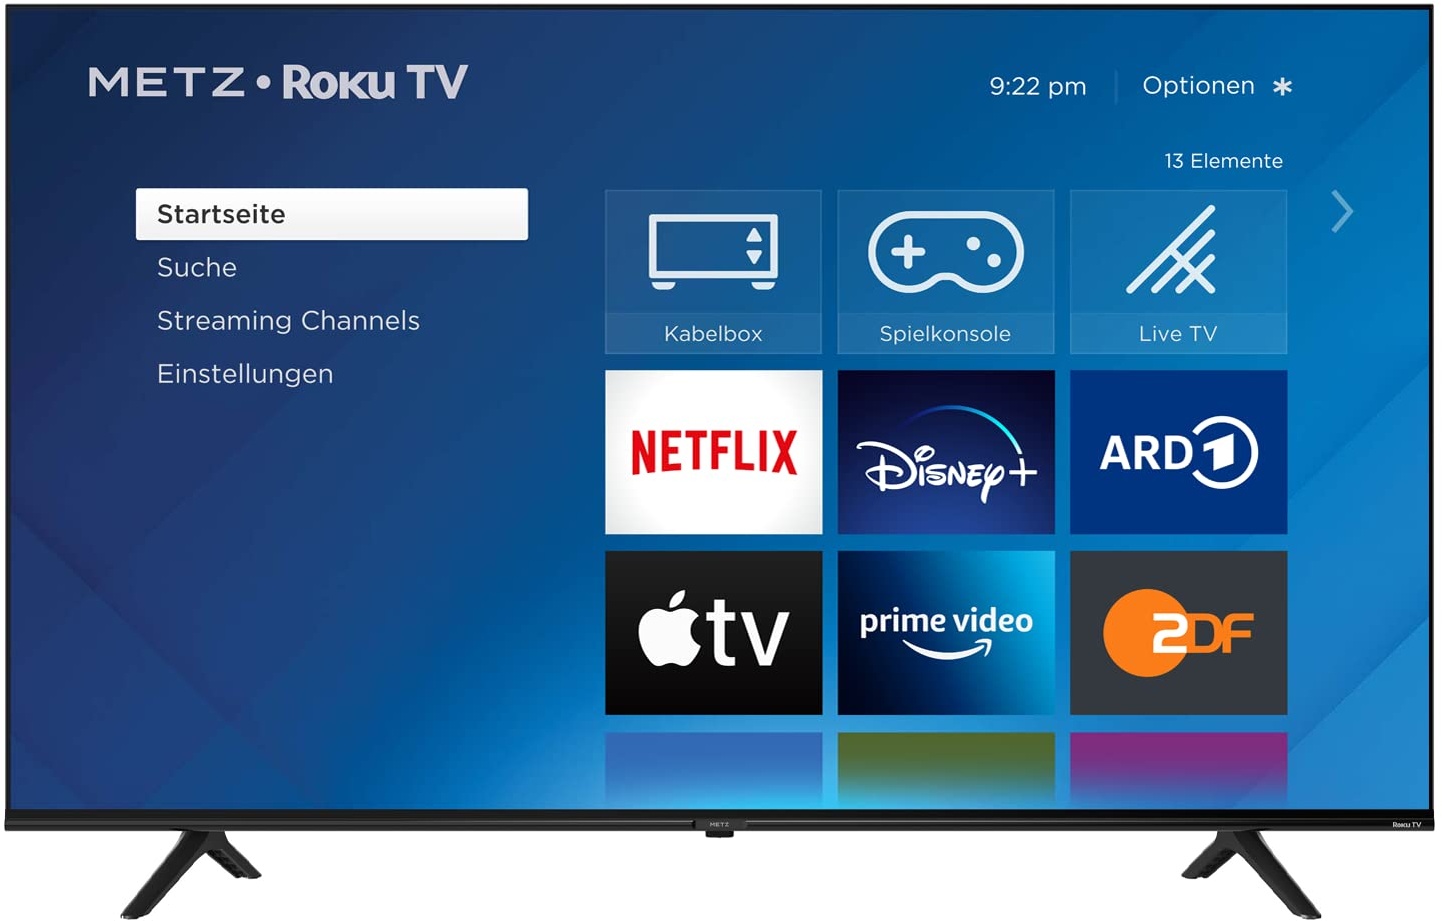 METZ Blue Roku TV, 4K UHD Smart TV, 43 Zoll, 109 cm, Fernseher mit Triple Tuner, TV mit WLAN, LAN, HDMI, USB, HDTV, 2 Monate RTL+ GRATIS, 43MUD6011Z